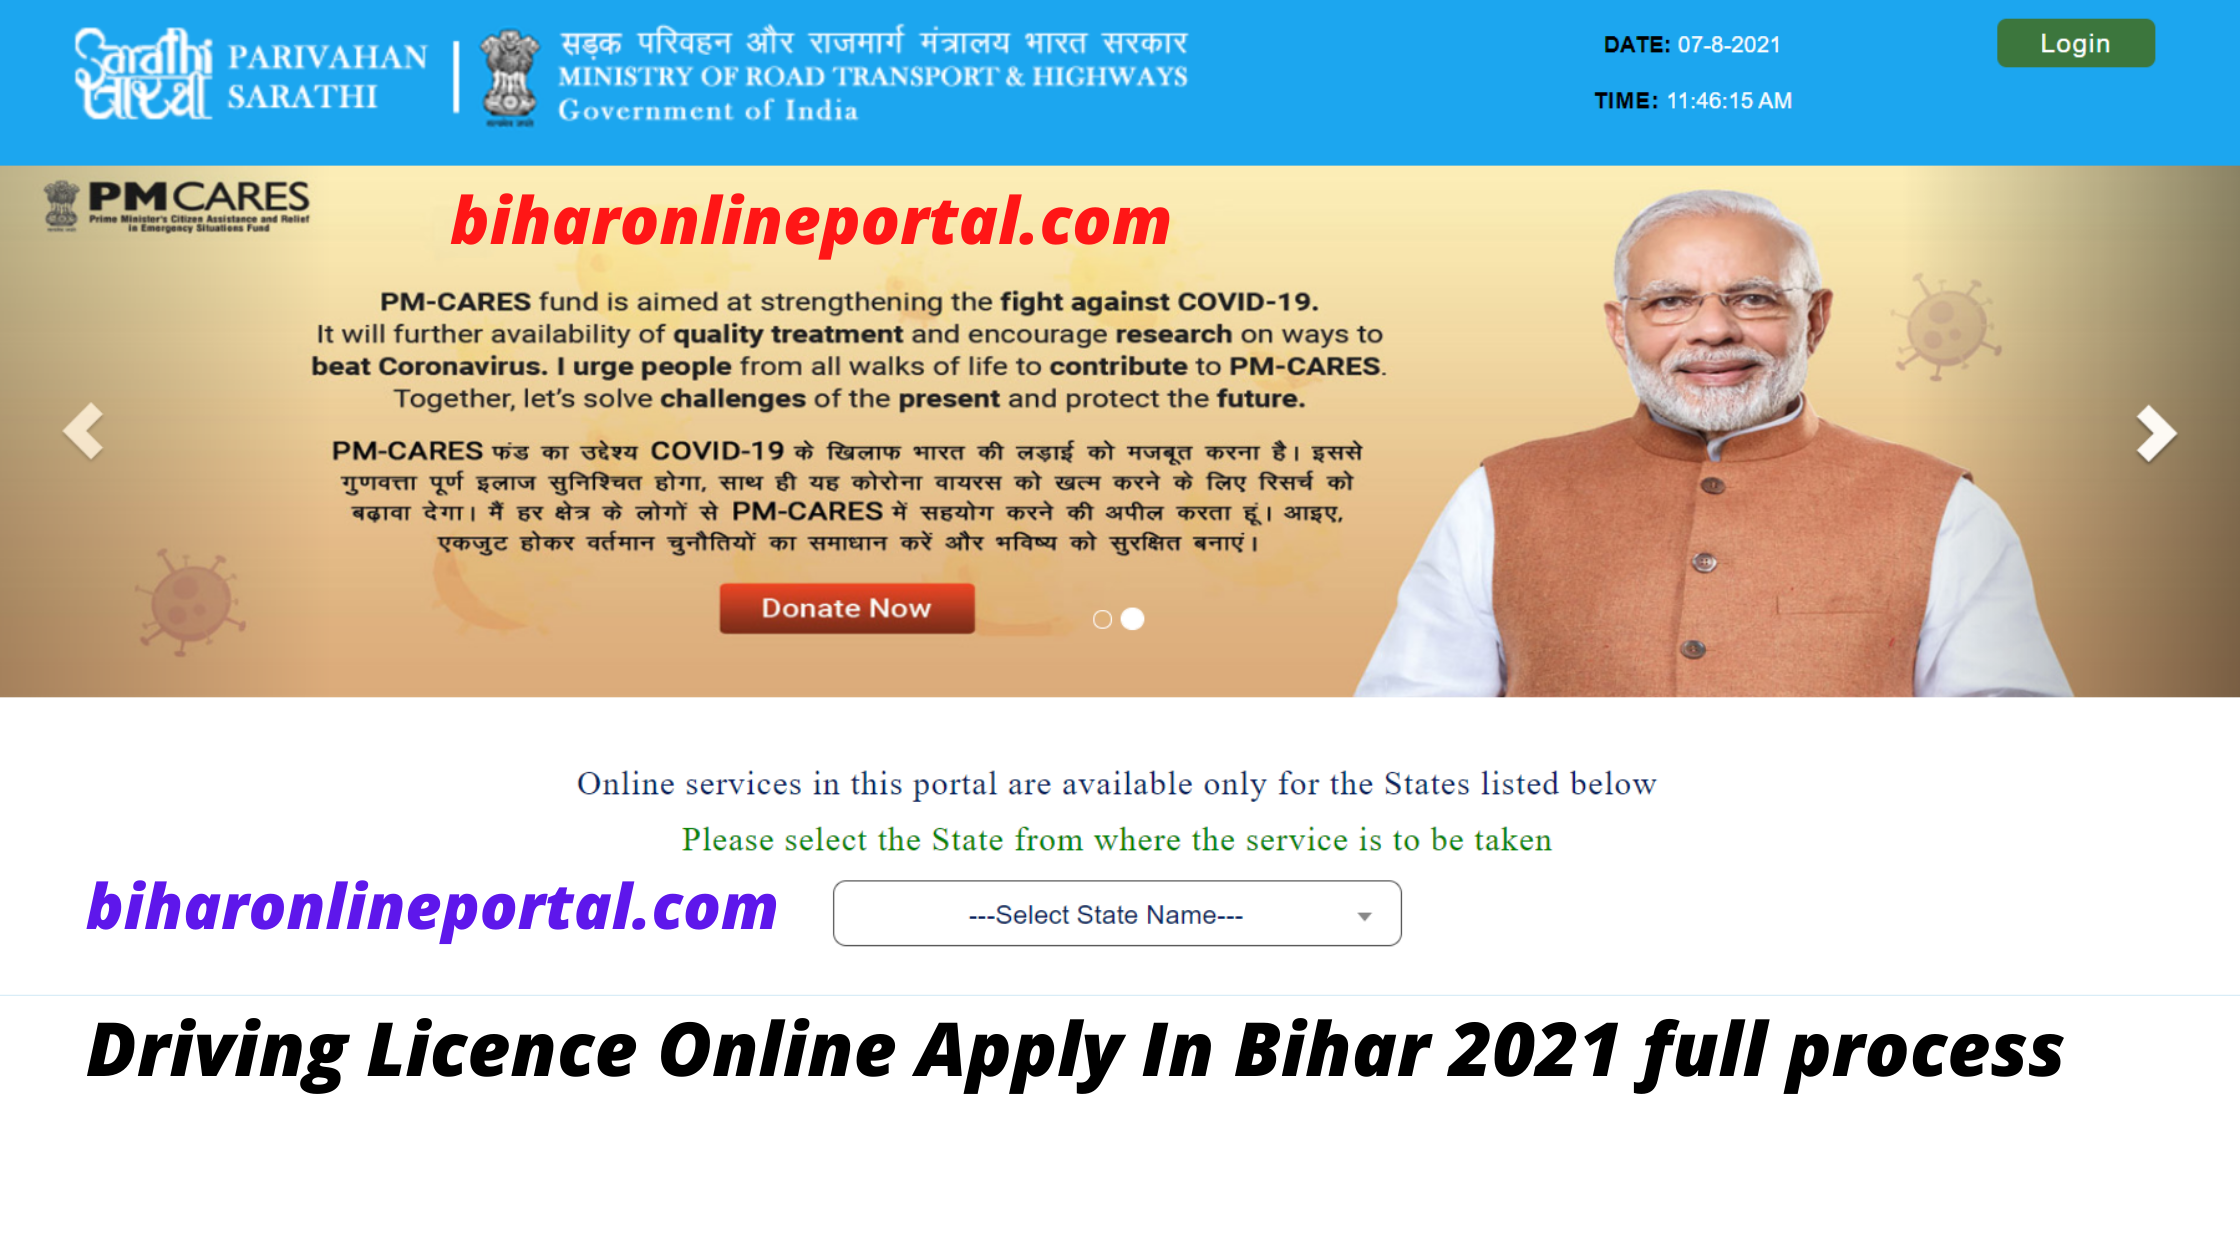 Driving Licence Online Apply In Bihar